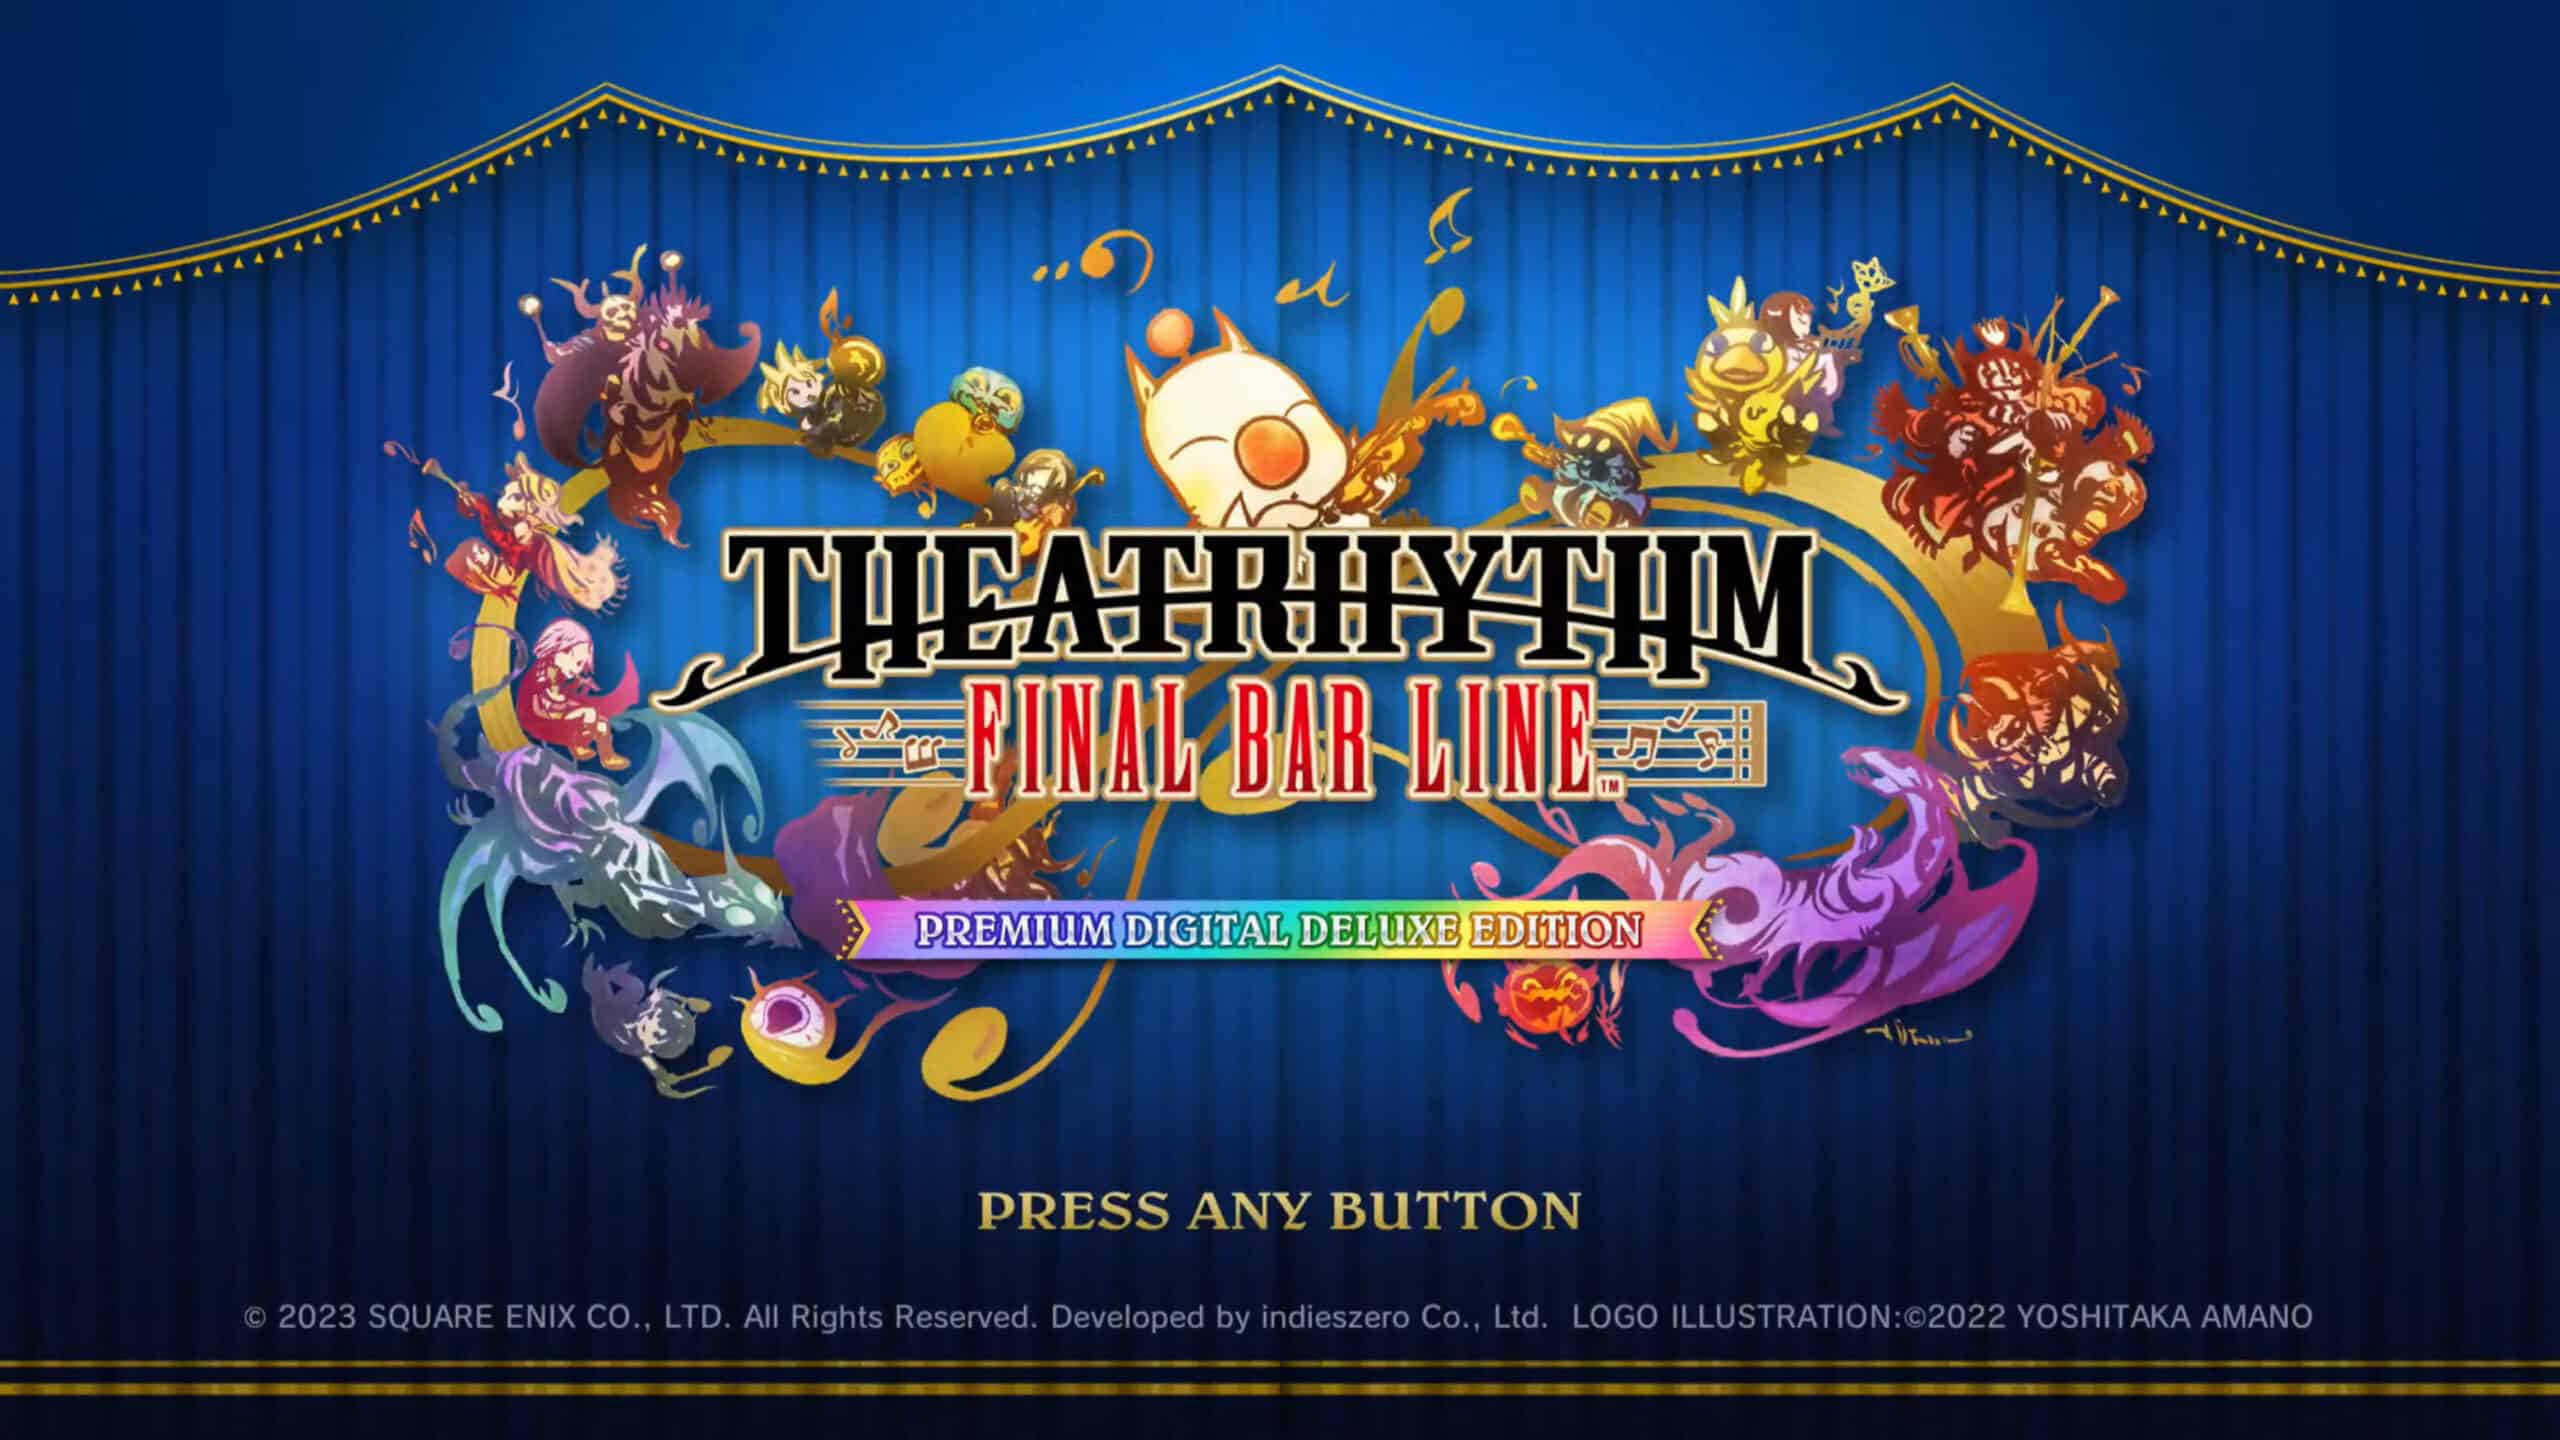 Final Fantasy Theatrhythm Final Bar Line Cheats